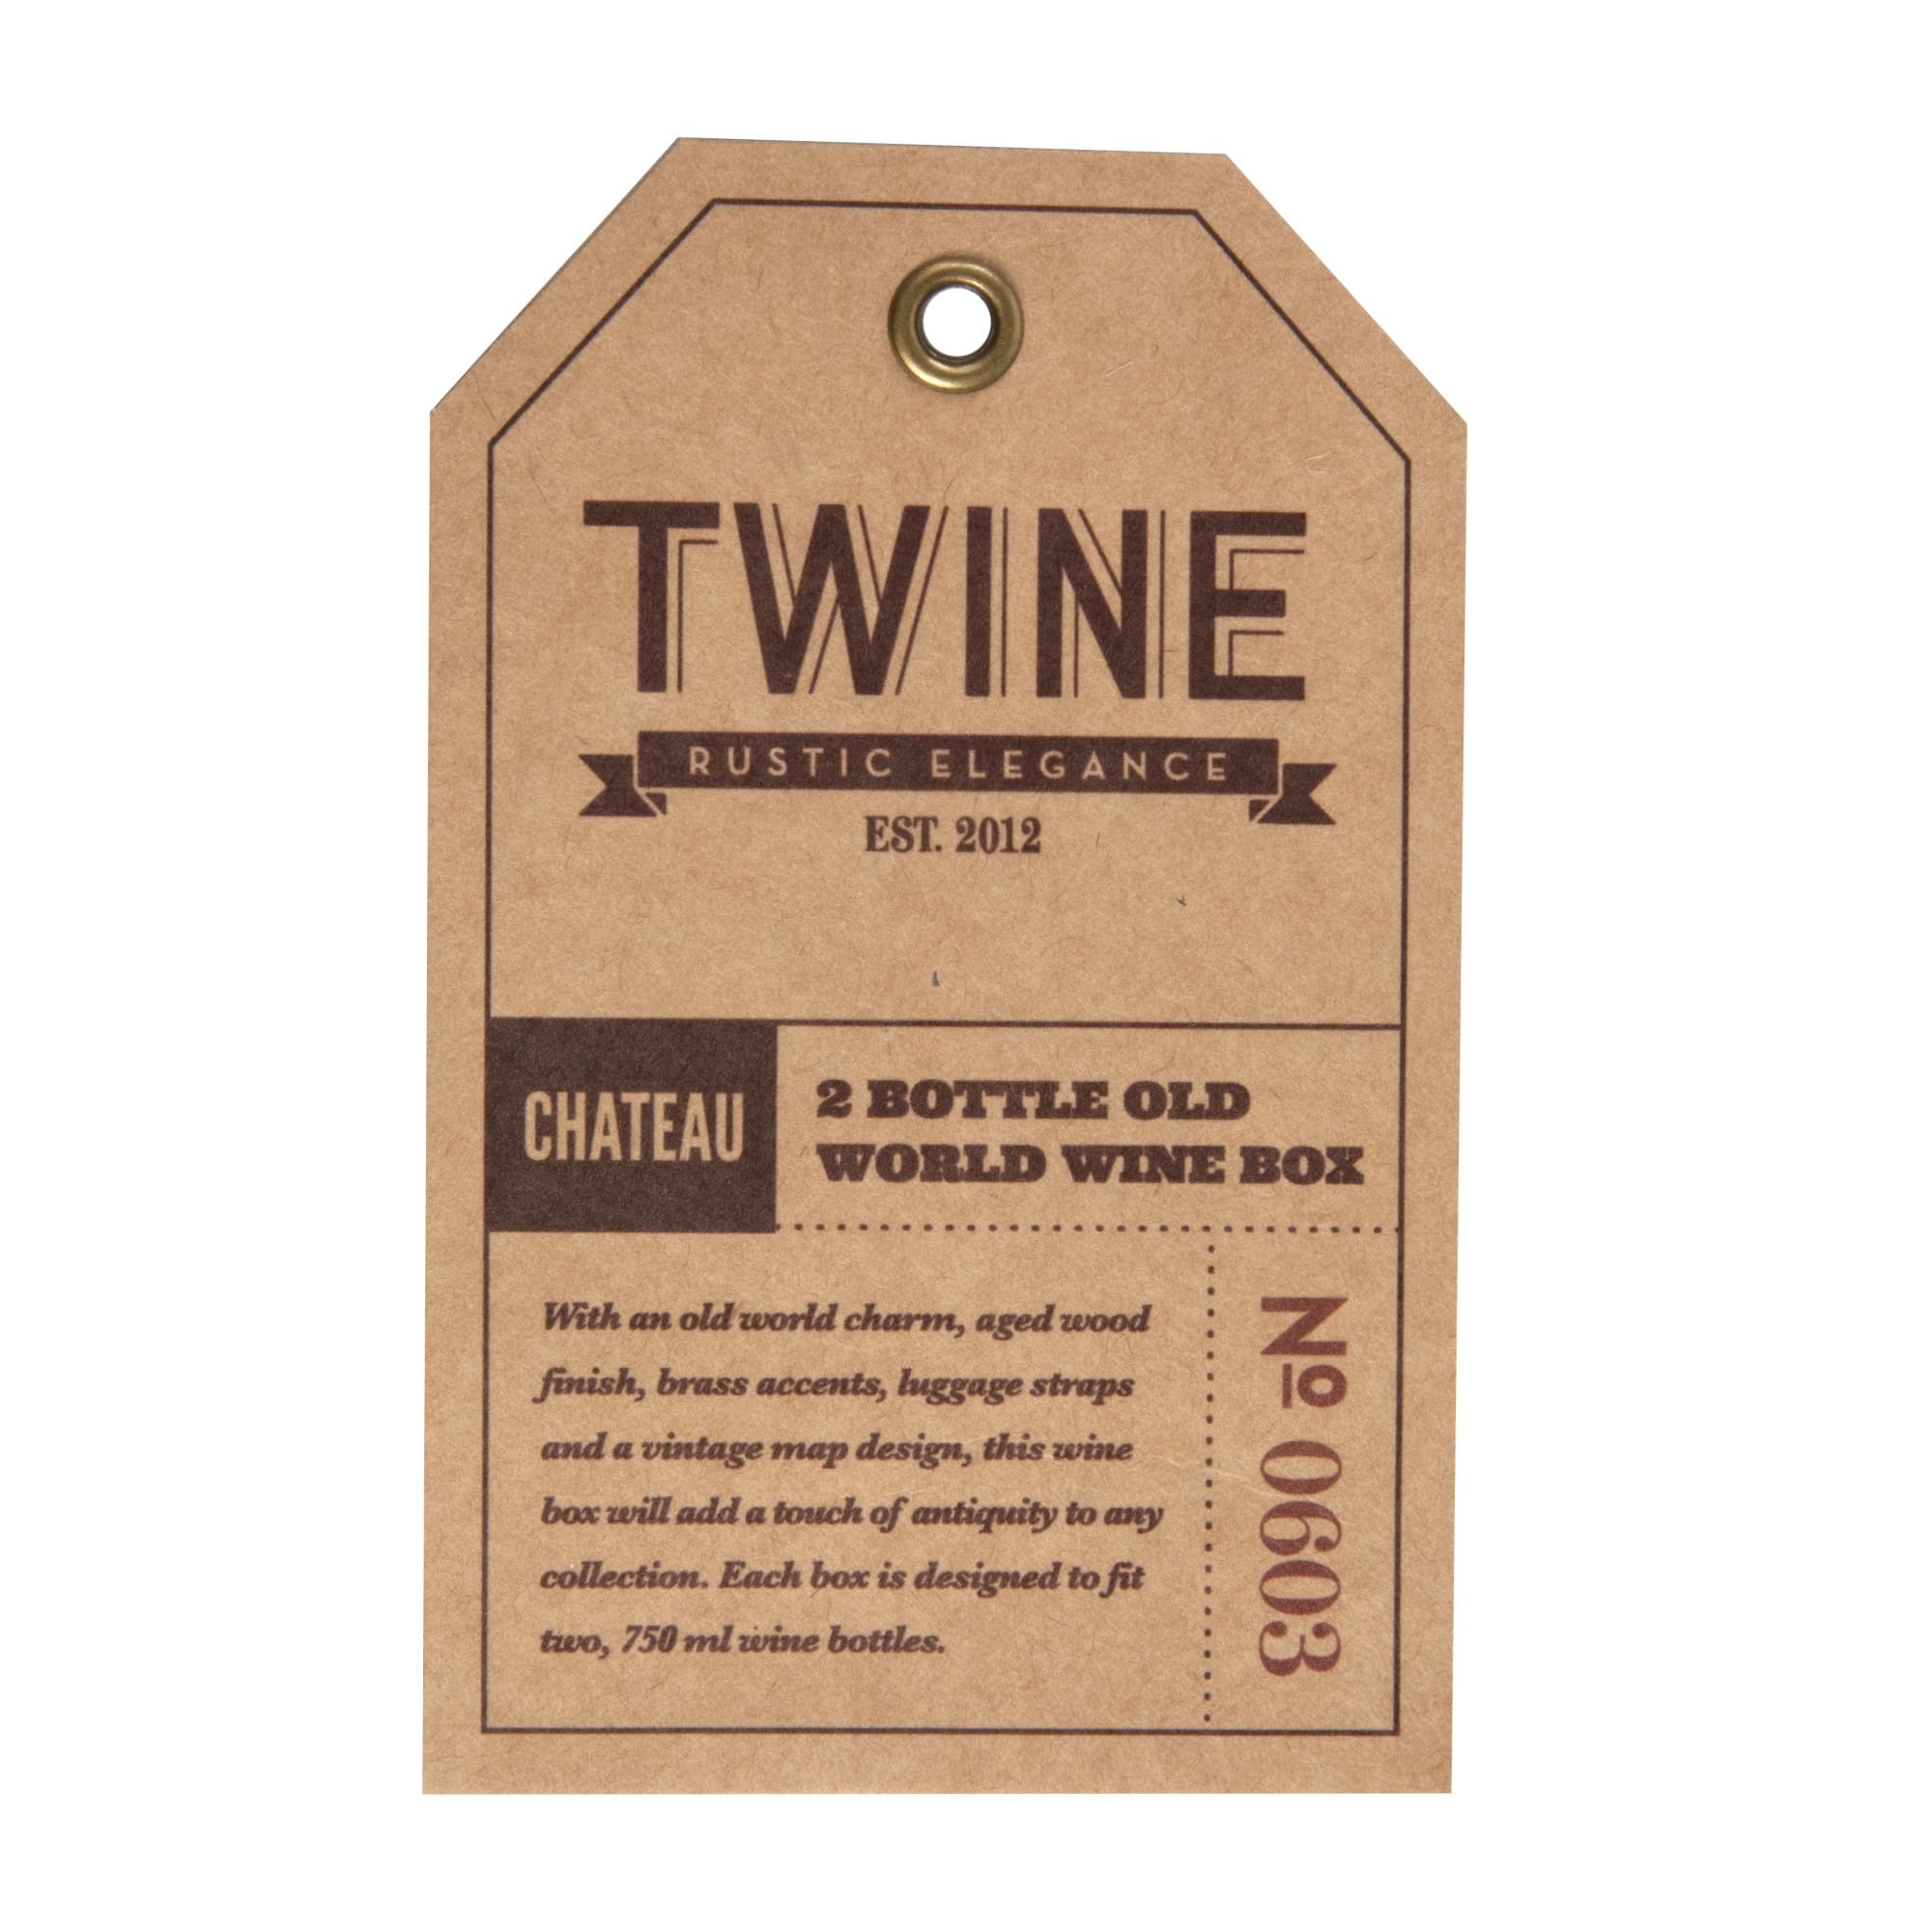 2 Bottle Old World Wooden Wine Box by Twine - 14.5